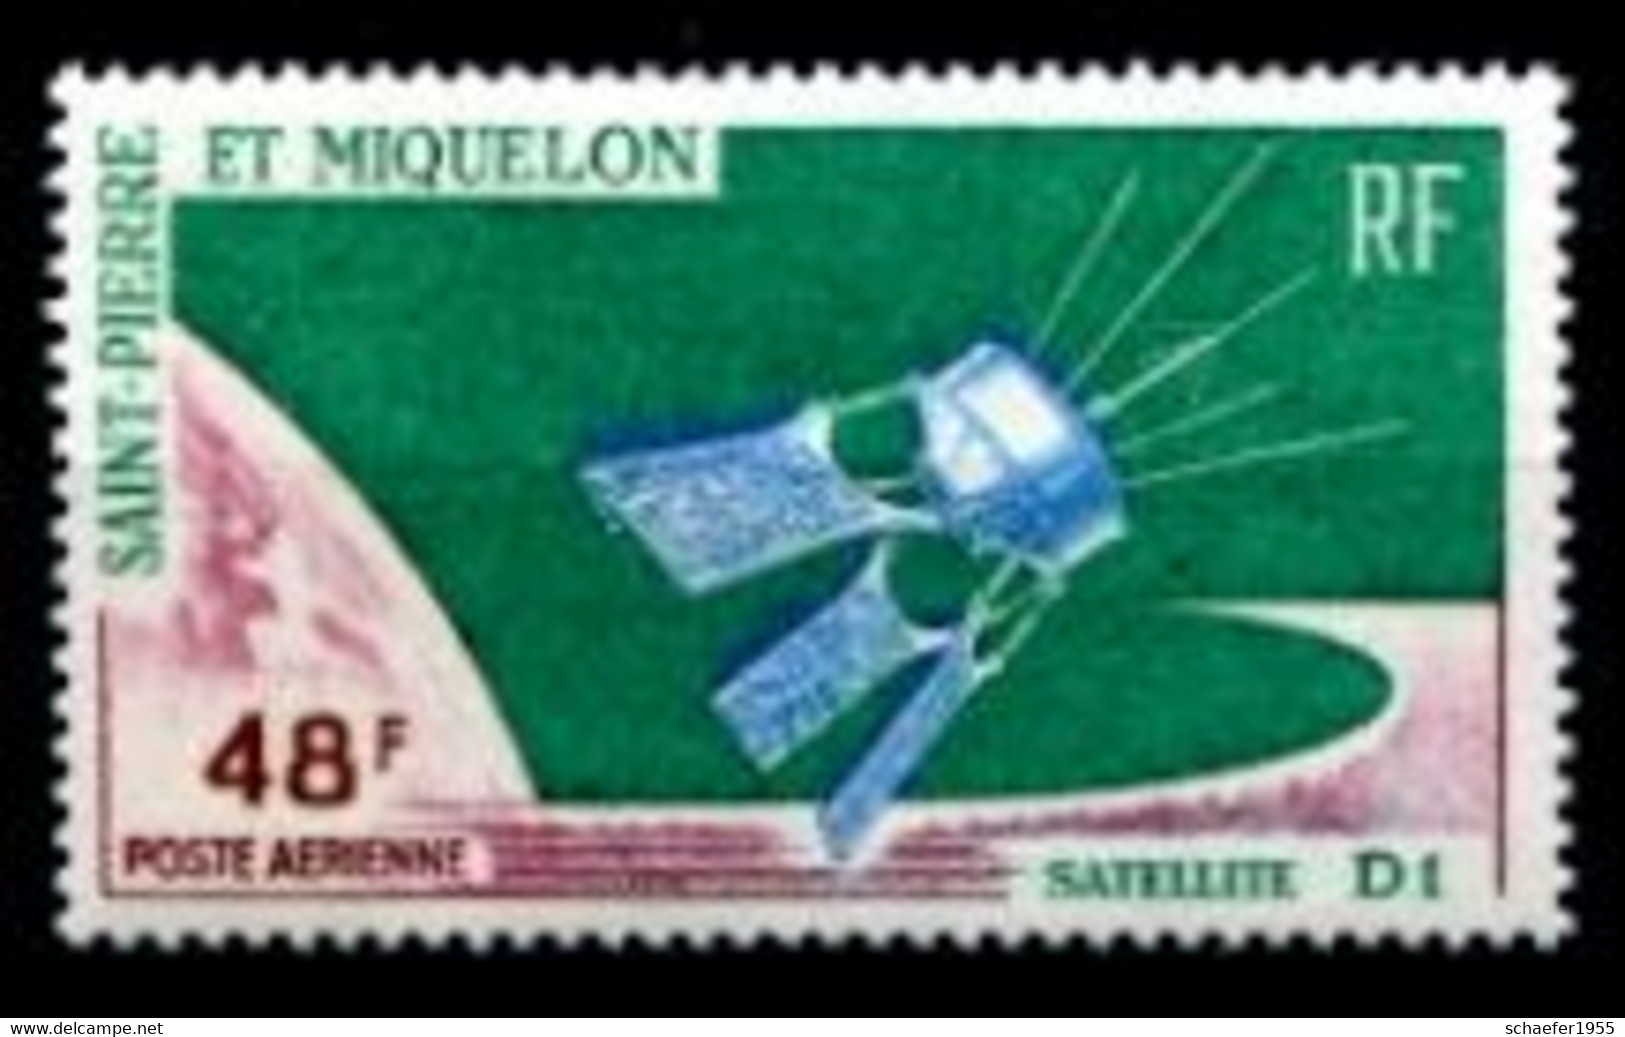 Saint Pierre Et Miquelon 1966 Satellite D1 FDC + Stamp - North  America